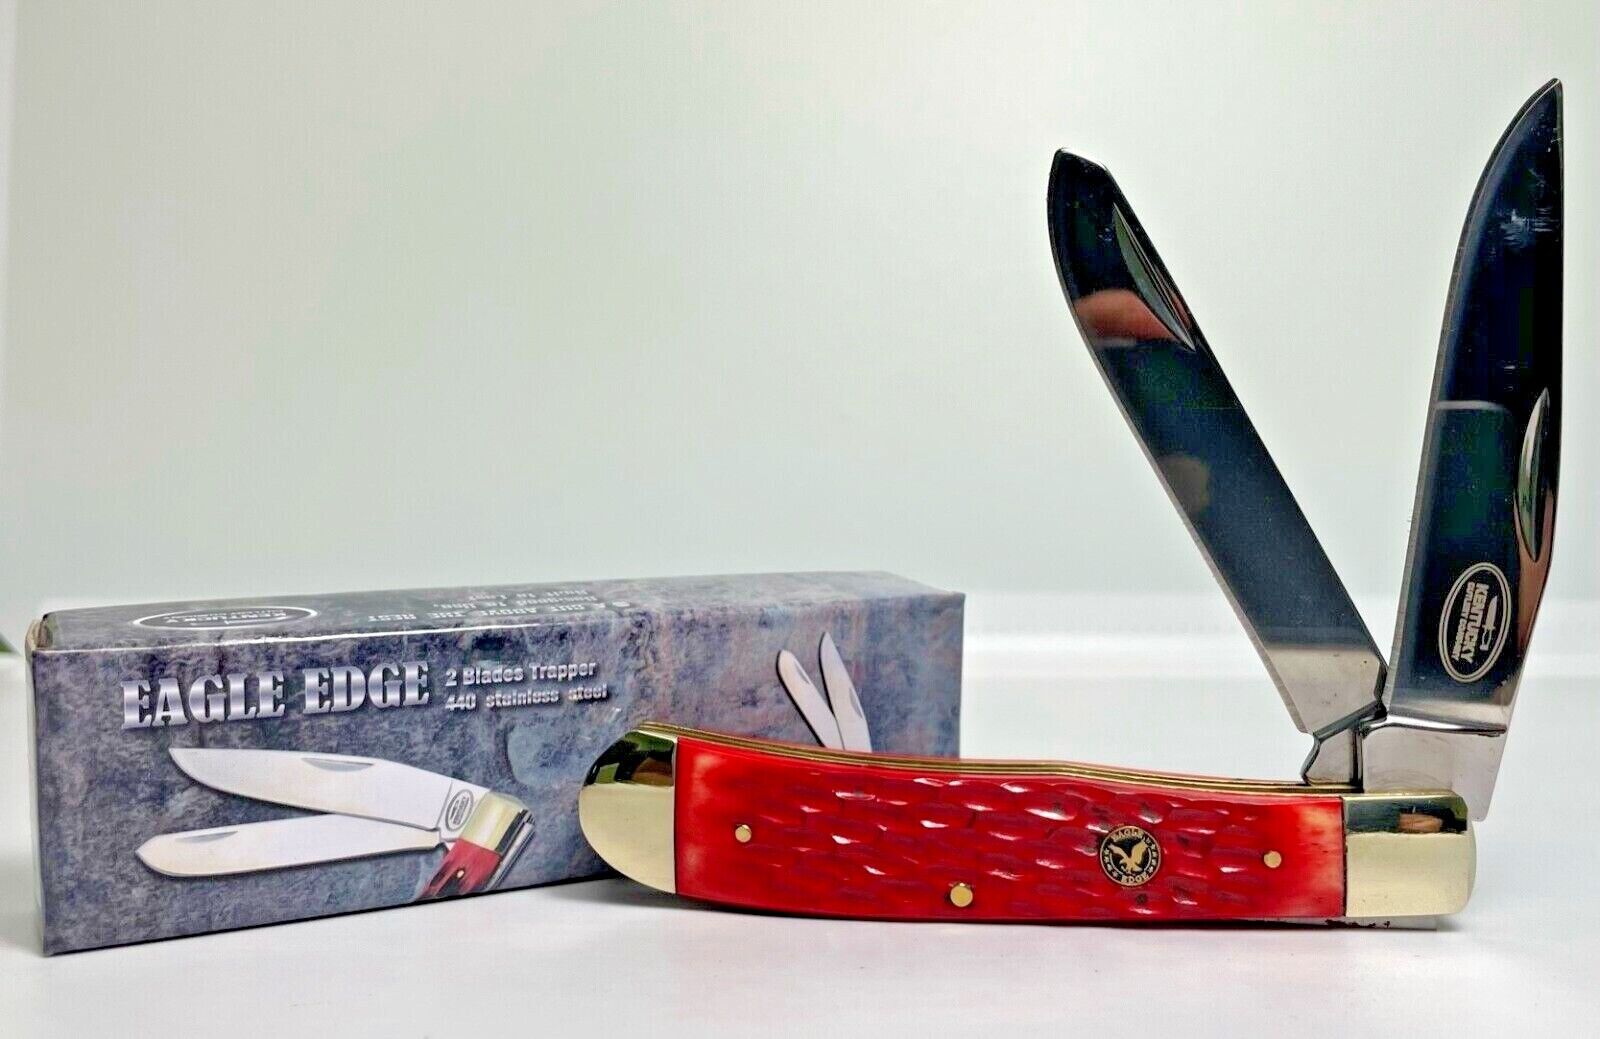 NEW Kentucky Cutlery - EAGLE EDGE - Pocket Knife, WRANGLER Trapper, 2 & 3 Blade